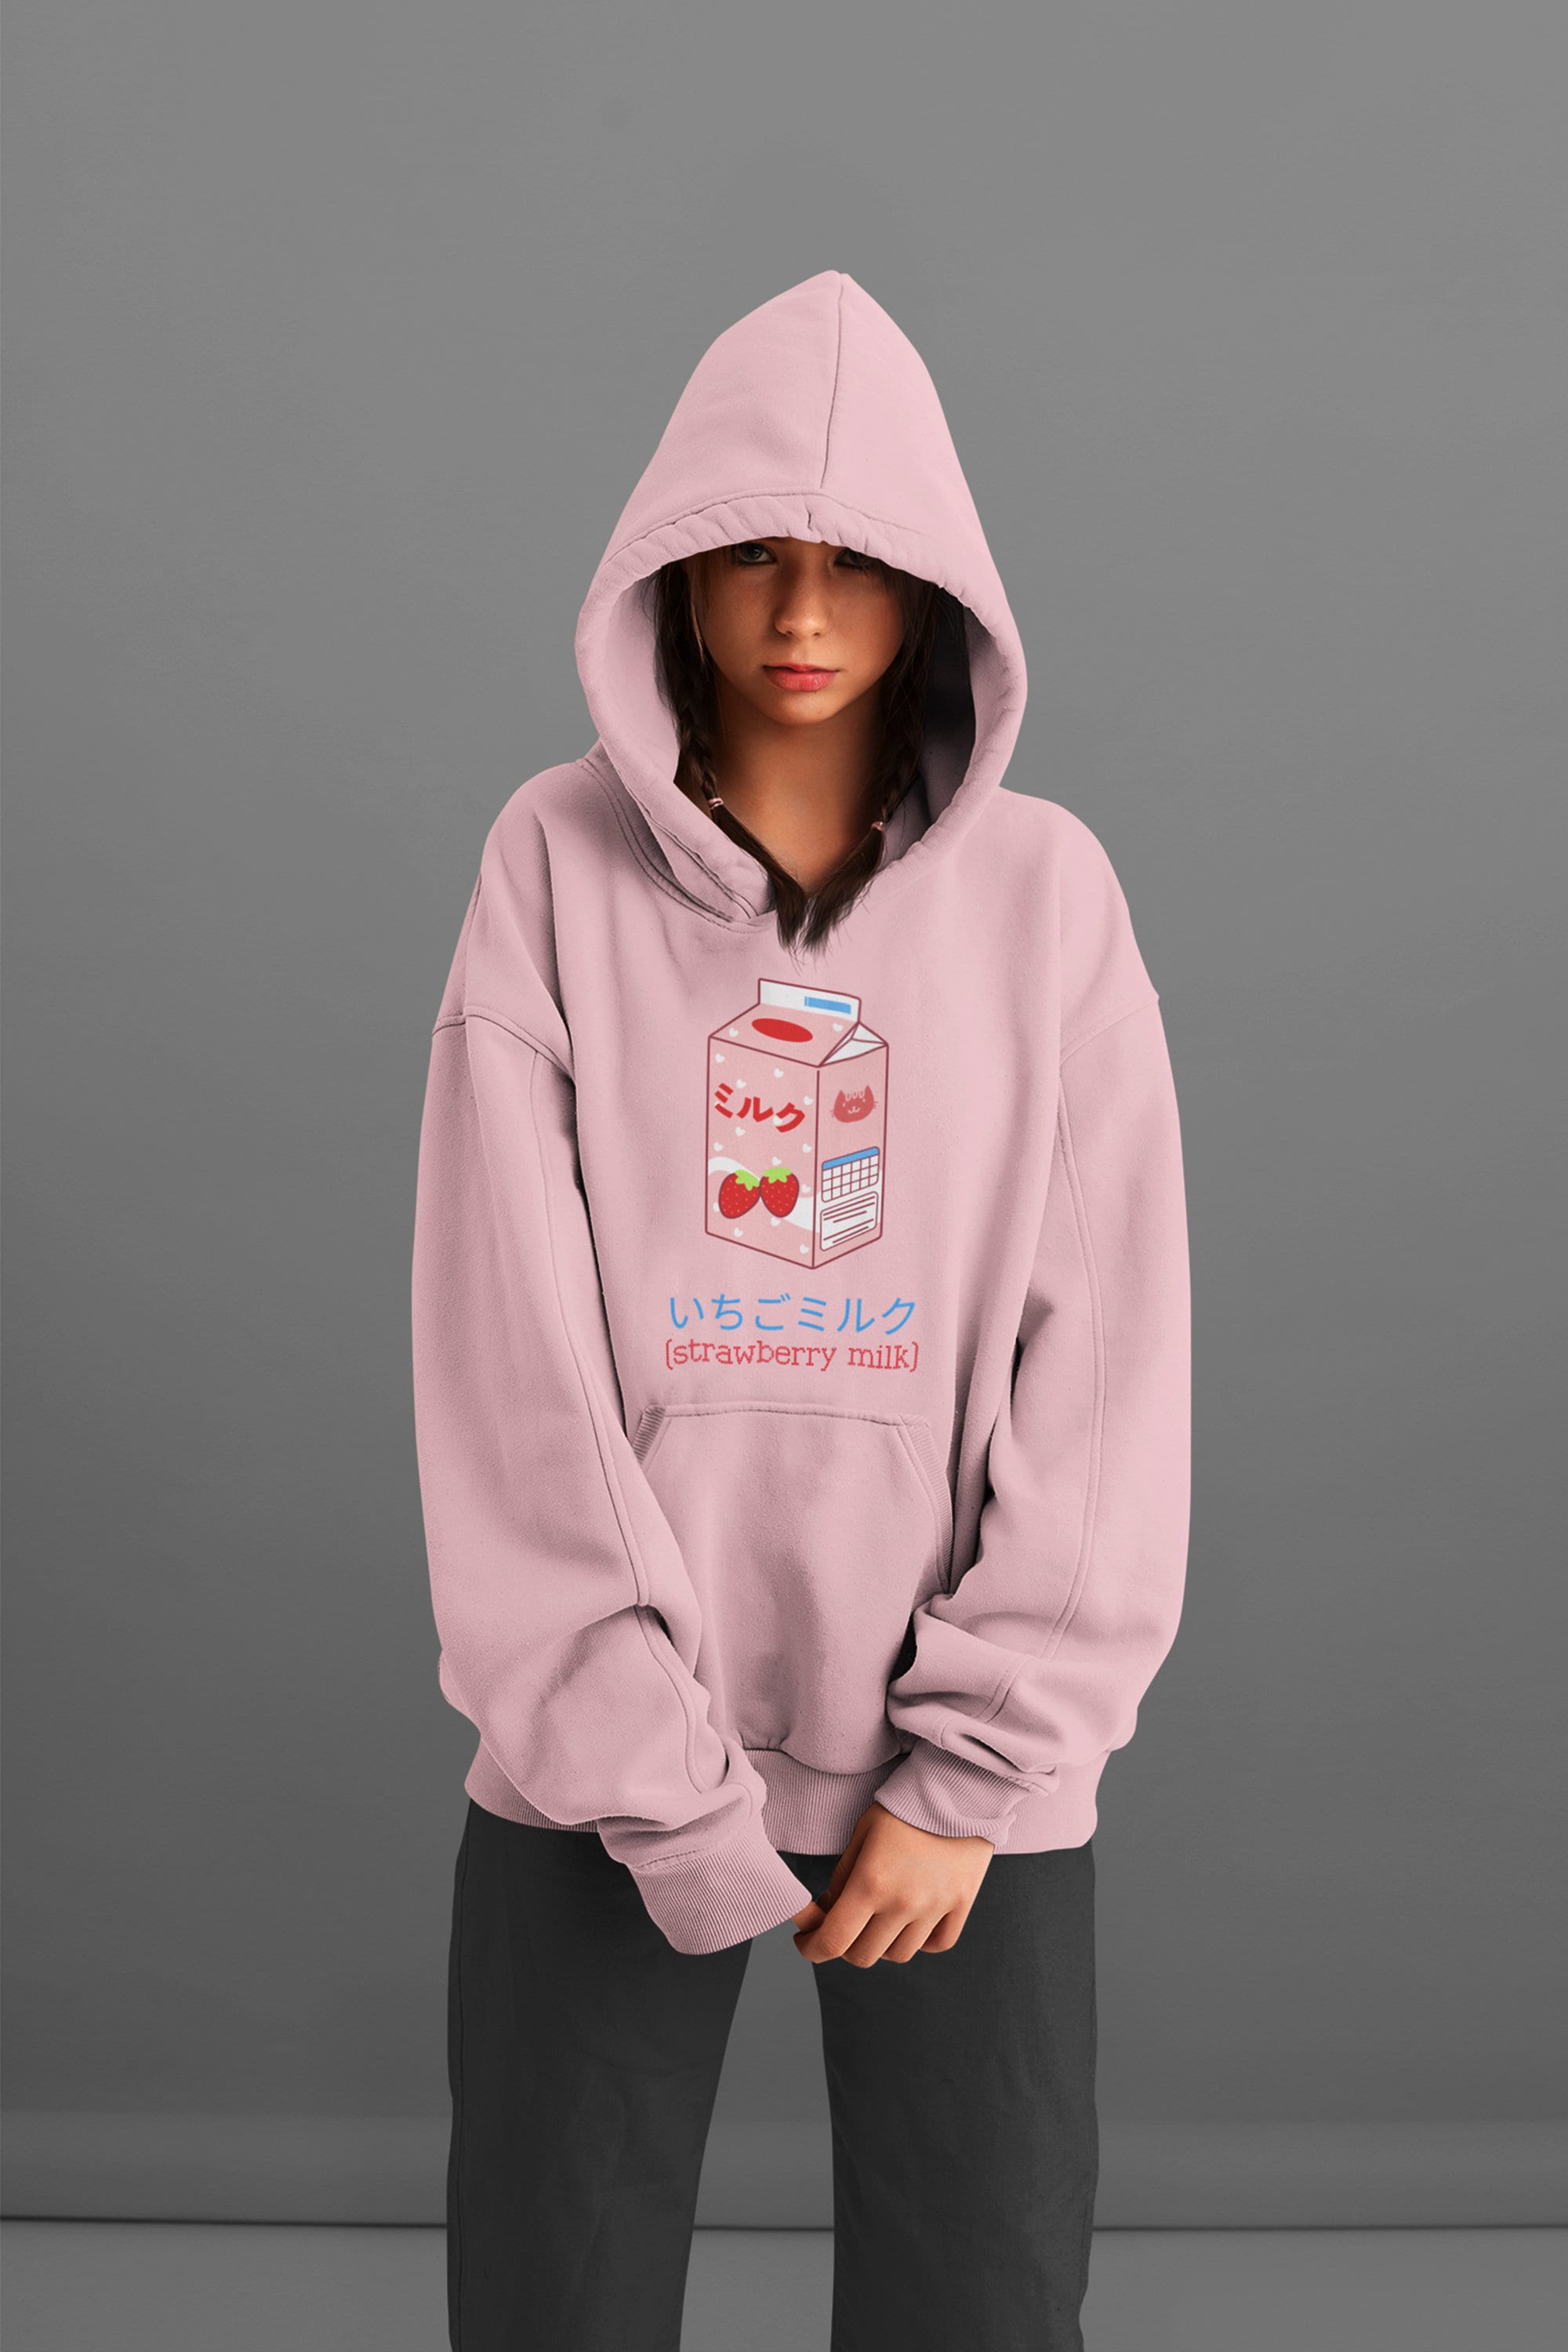 Fashiononly Sweatshirts Pullover Women Shirt Pastel Strawberry Milk Letter Cool Kawaii Teen Clothes